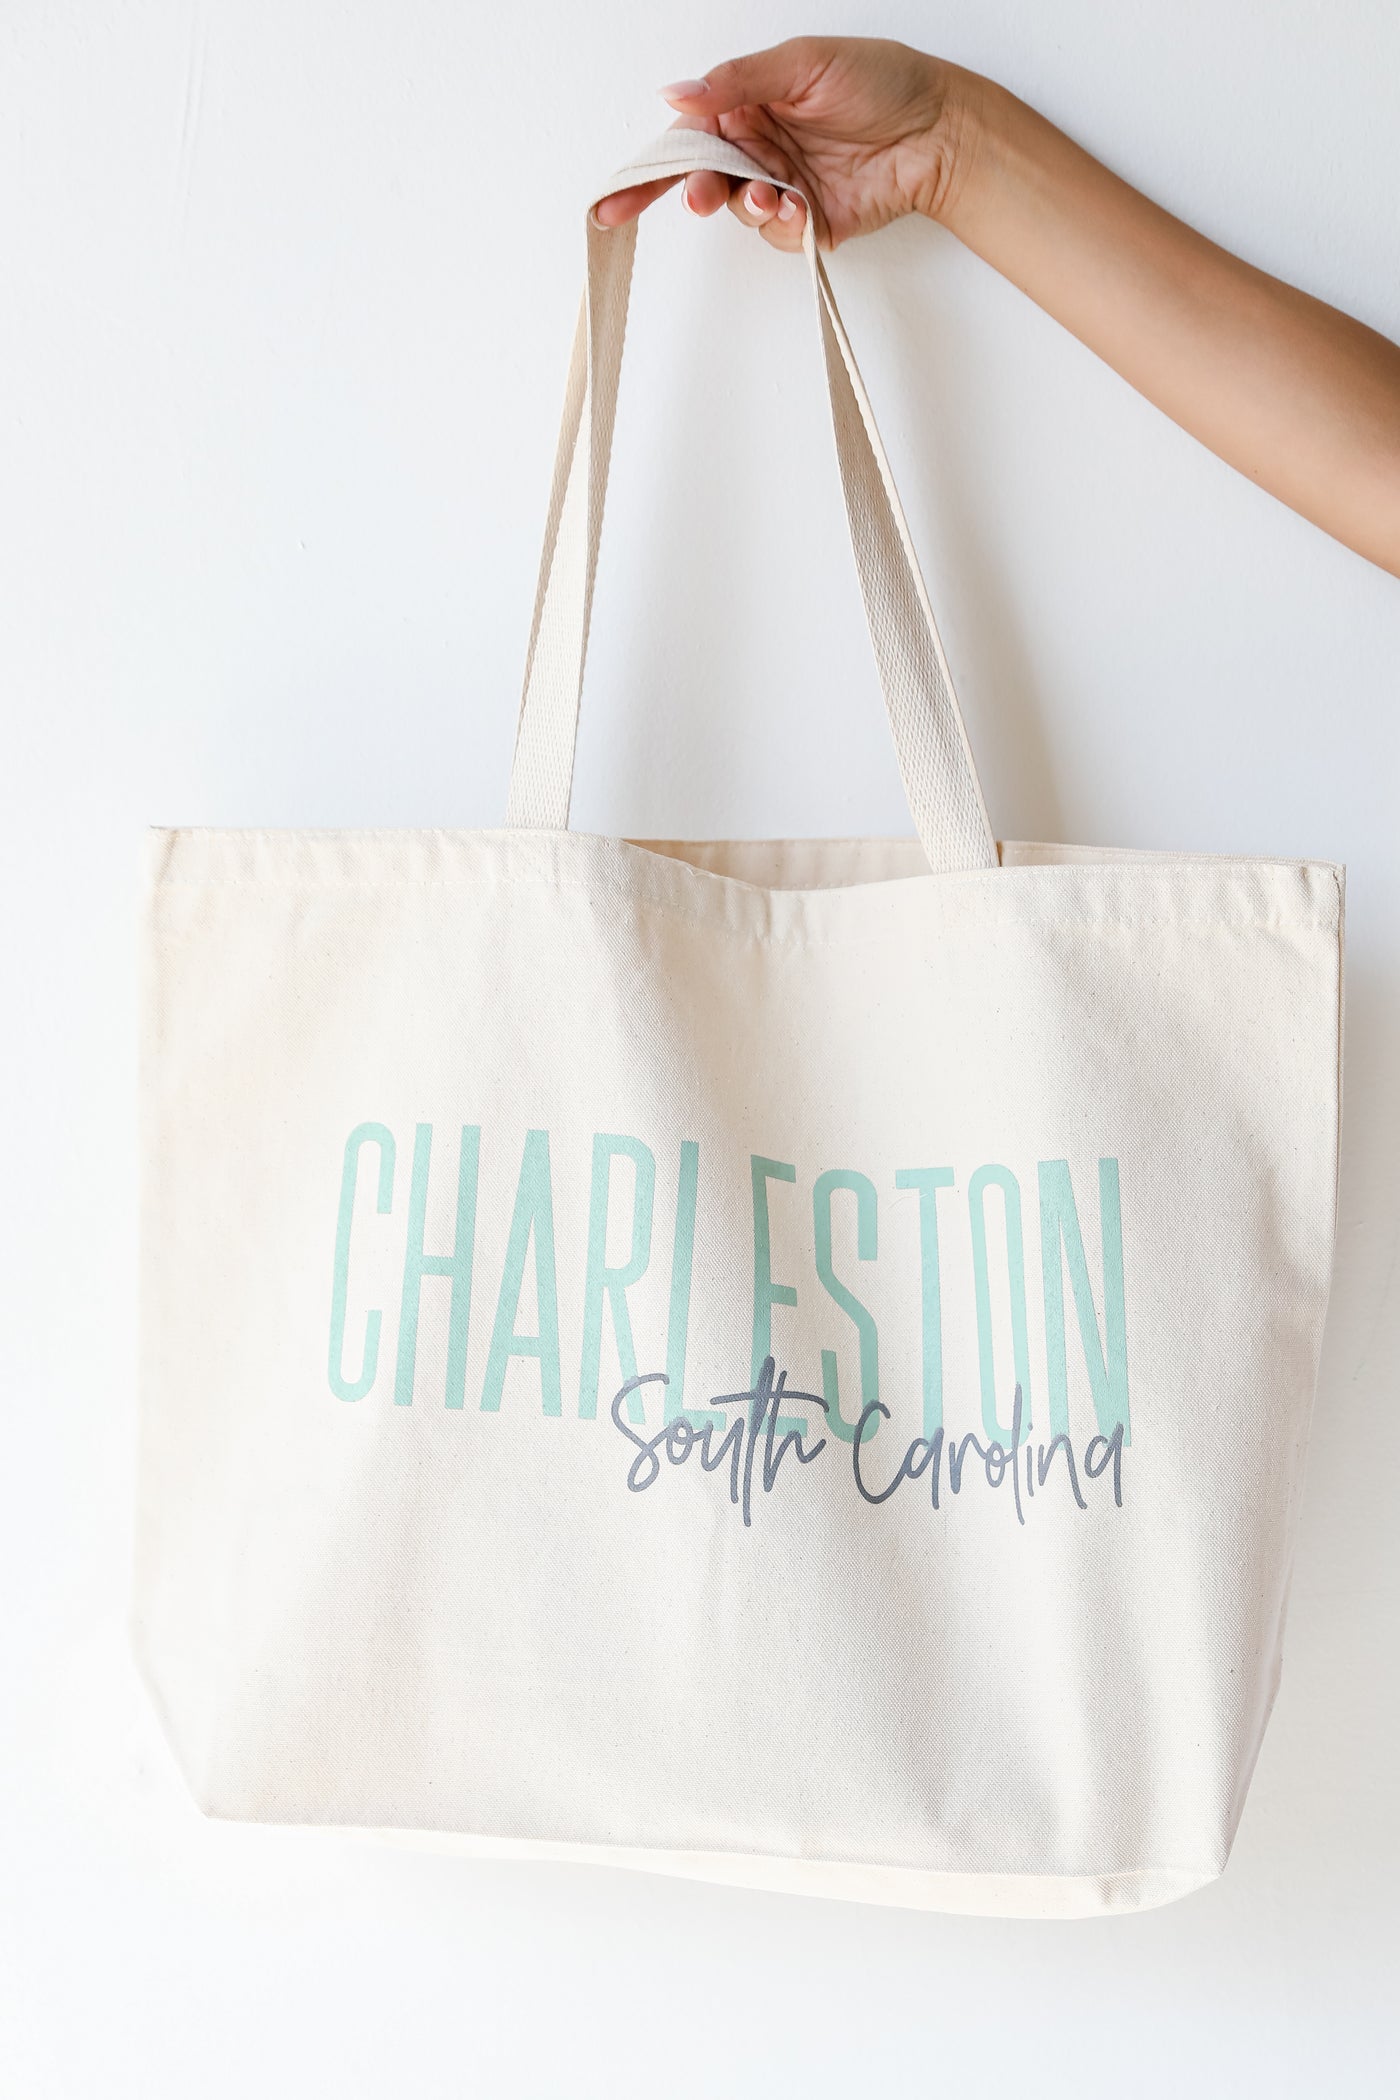 Charleston South Carolina Script Large Tote Bag front view